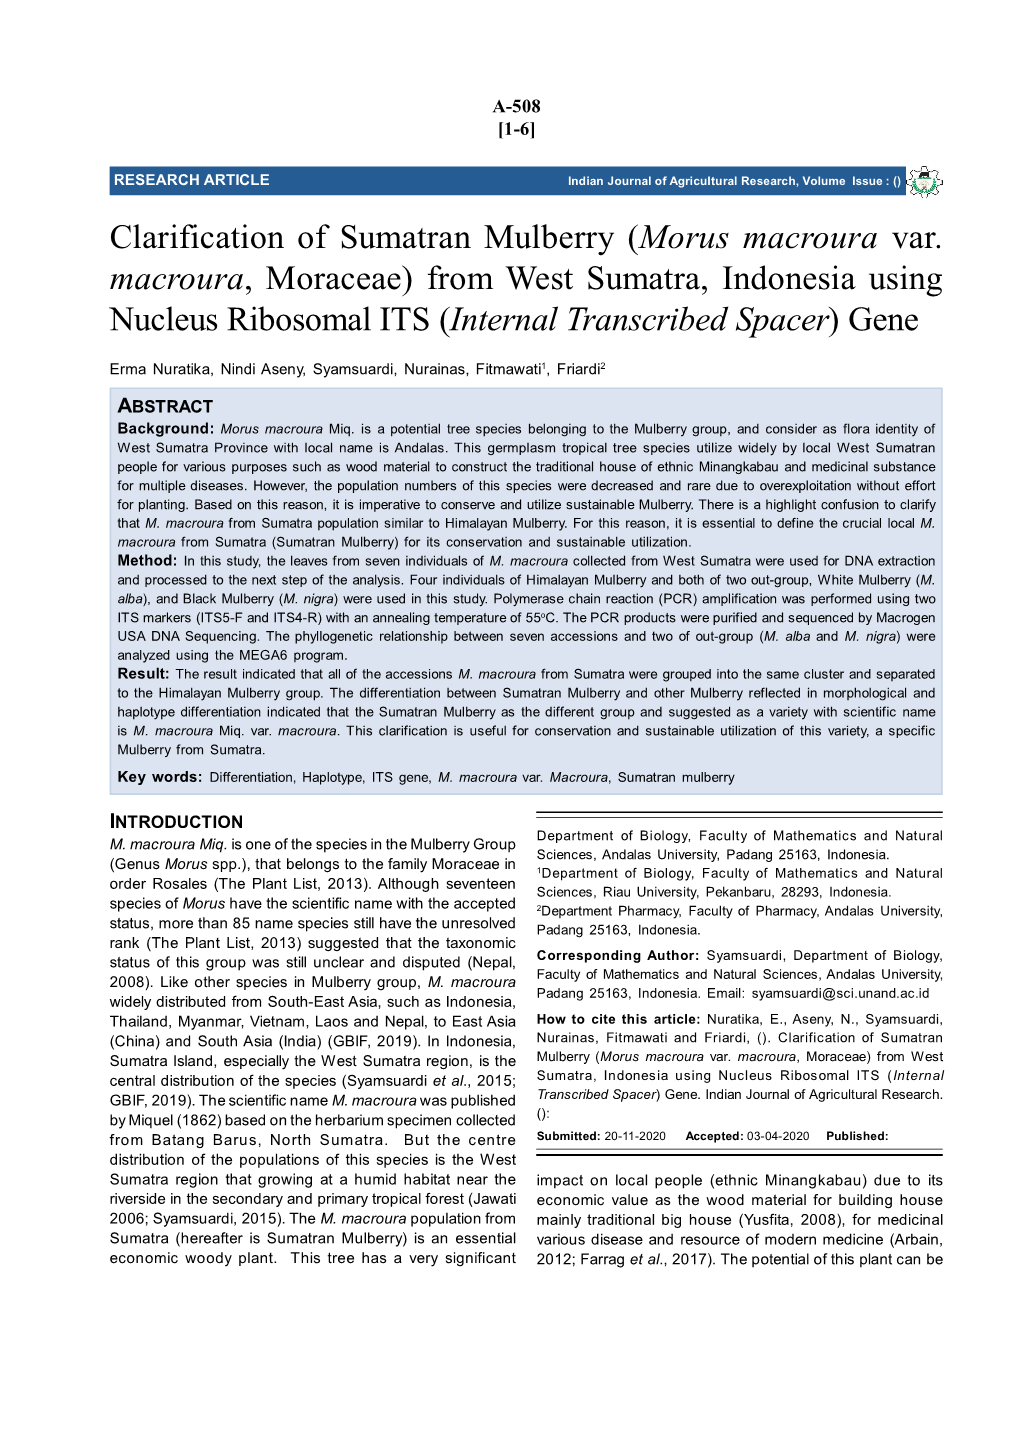 Clarification of Sumatran Mulberry (Morus Macroura Var. Macroura